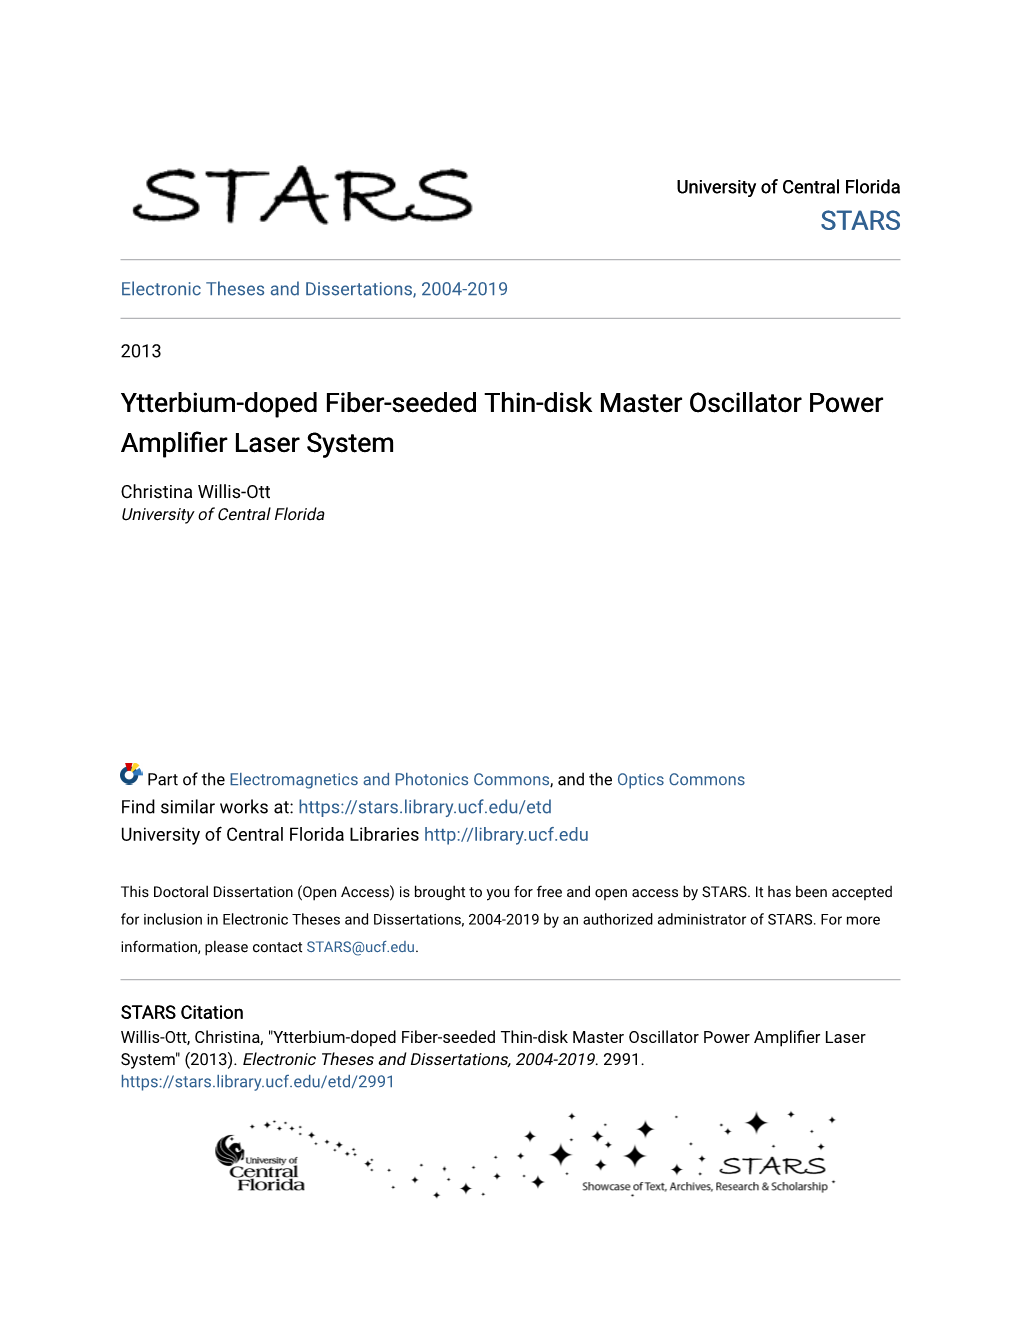 Ytterbium-Doped Fiber-Seeded Thin-Disk Master Oscillator Power Amplifier Laser System